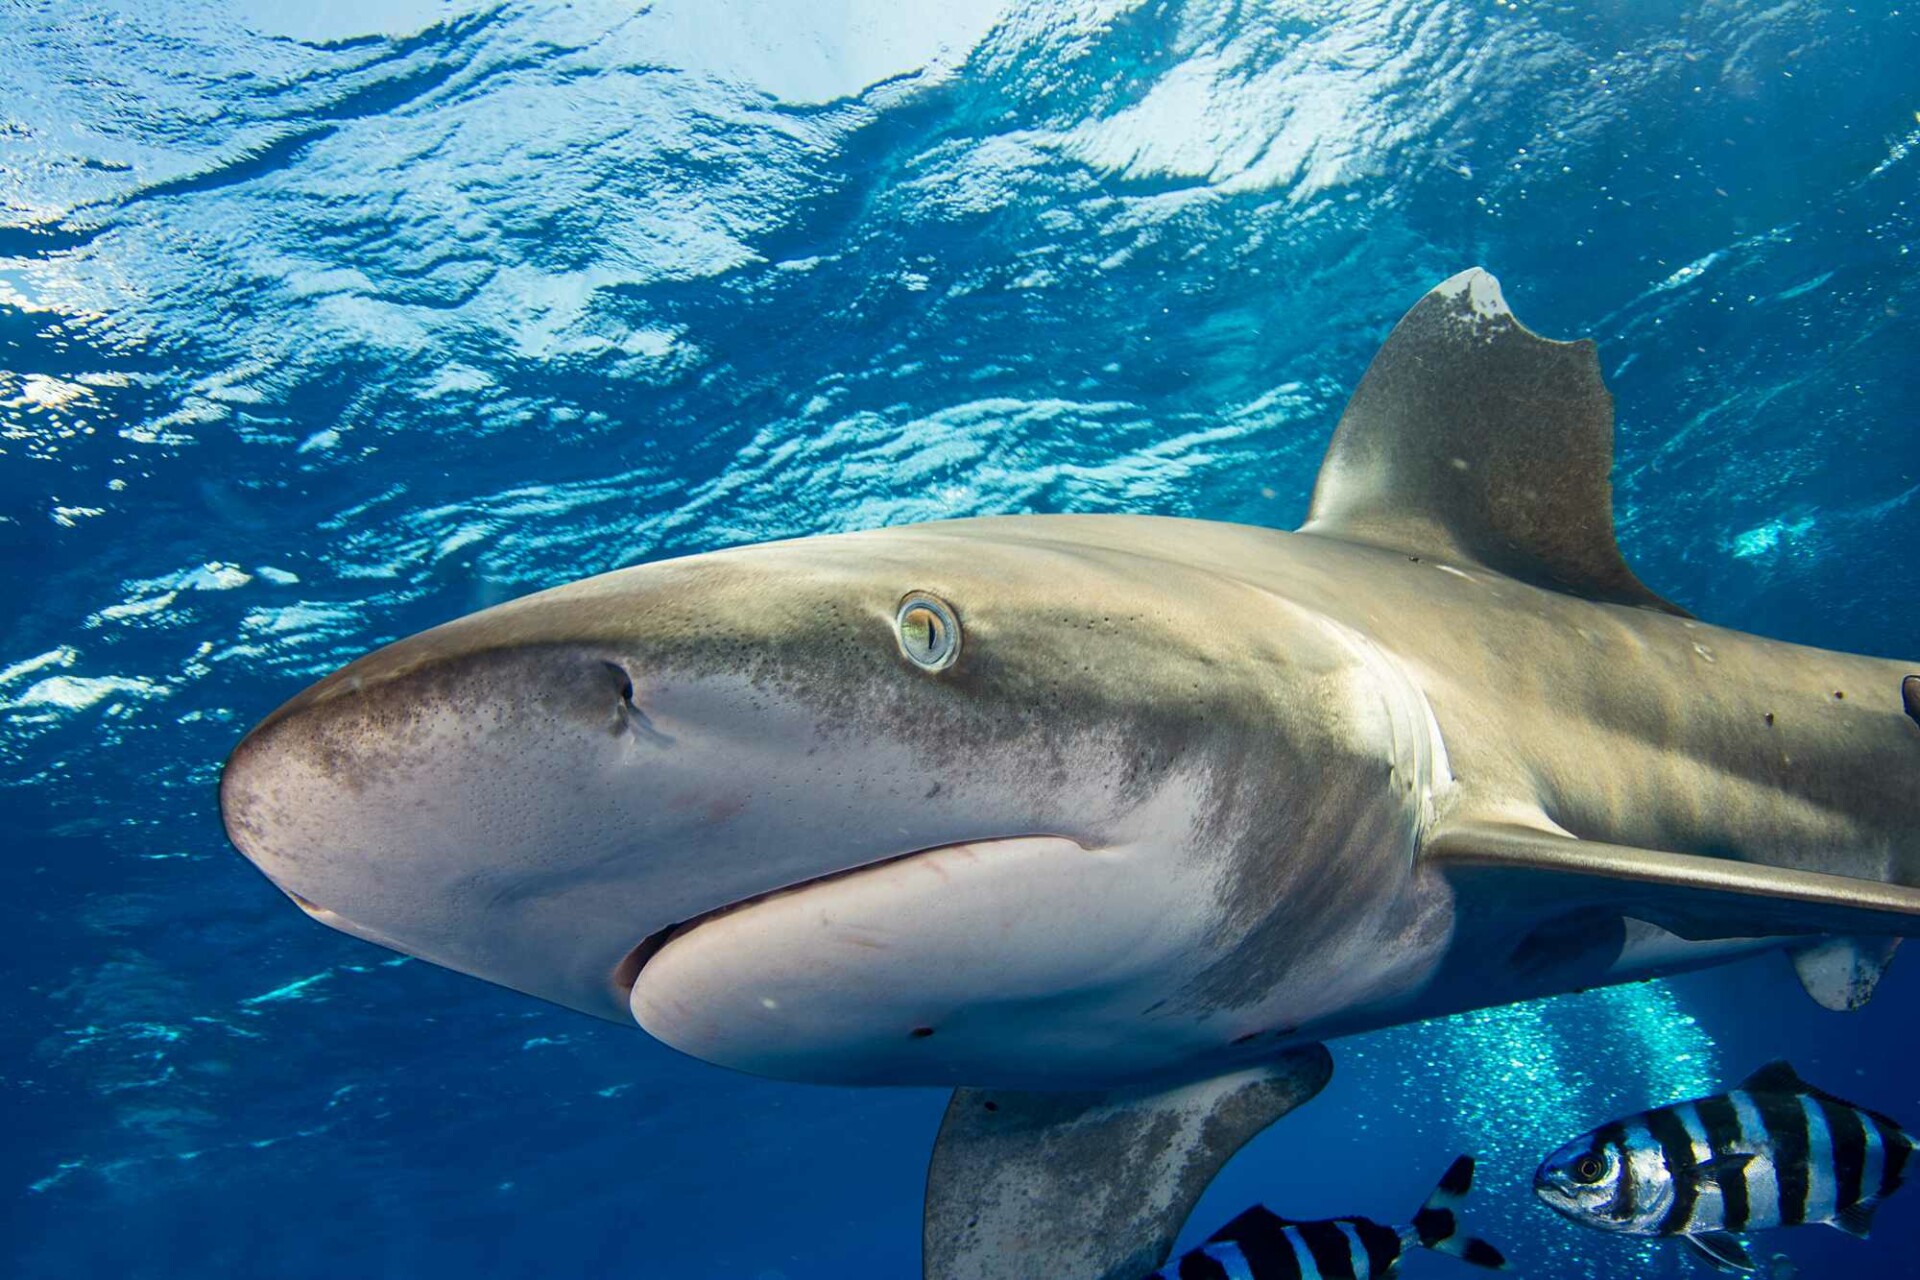 Wanted: Divers’ oceanic & basking shark sightings